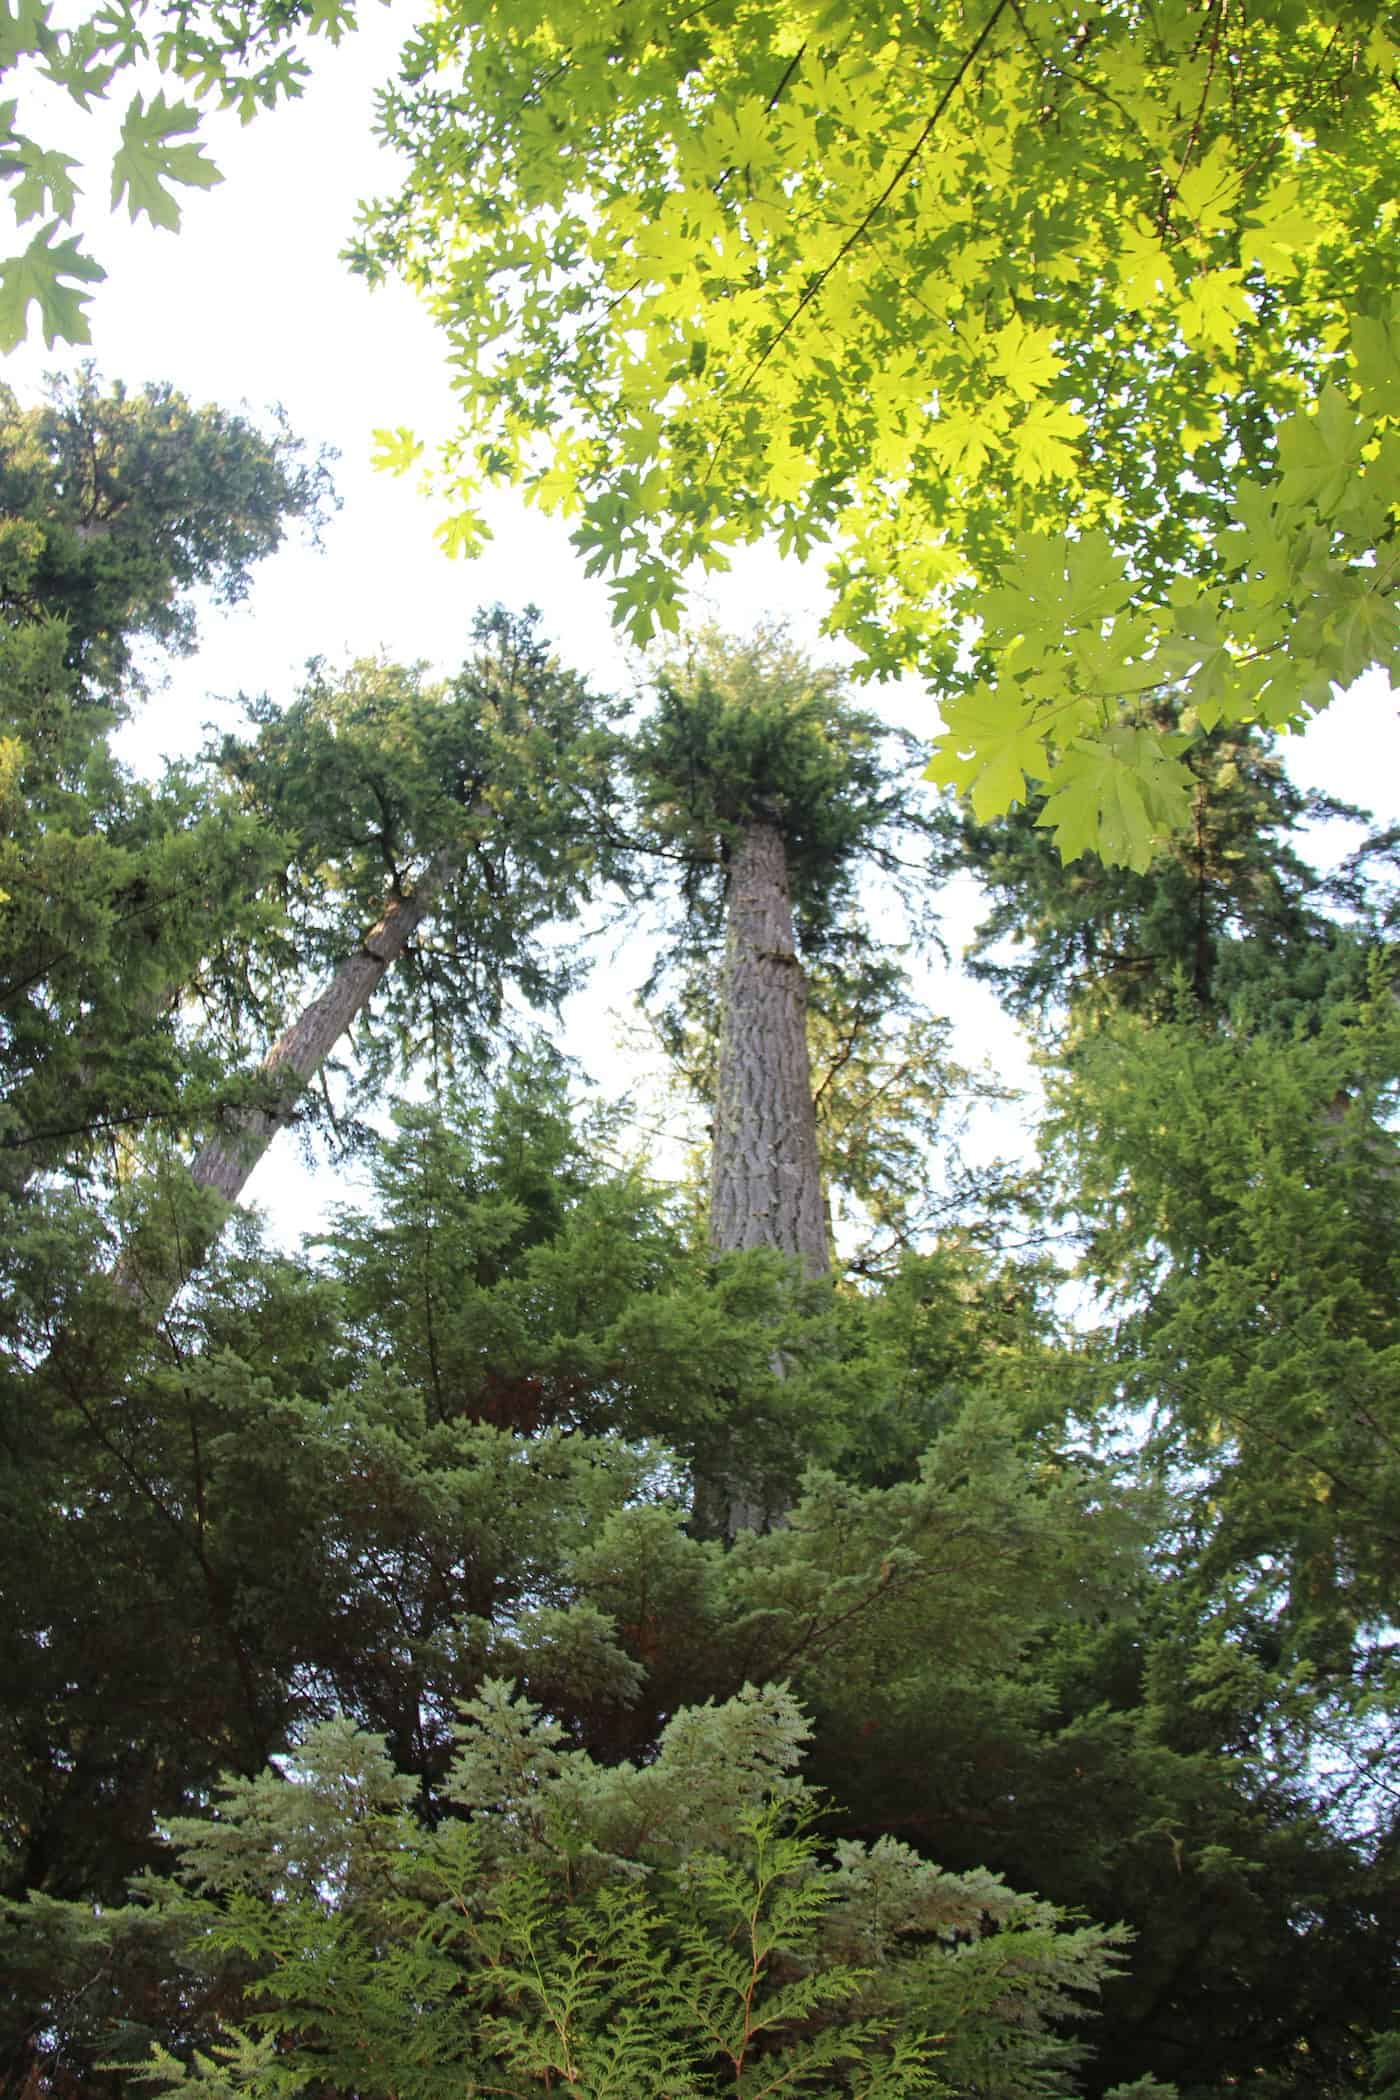 Douglas fir - giant coastal